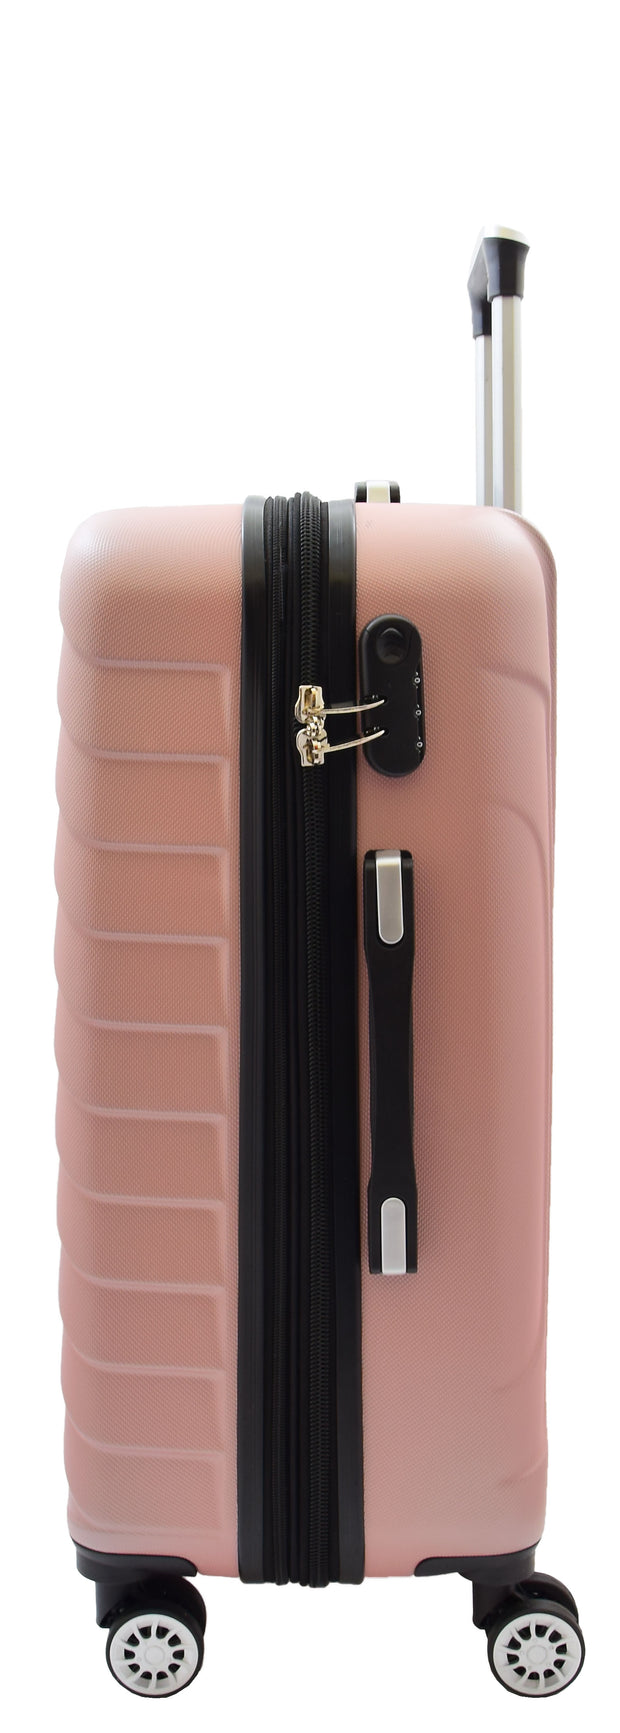 4 Wheel Suitcases Hard Shell Rose Gold ABS Digit Lock Lightweight Luggage Travel Bag Melton medium-2